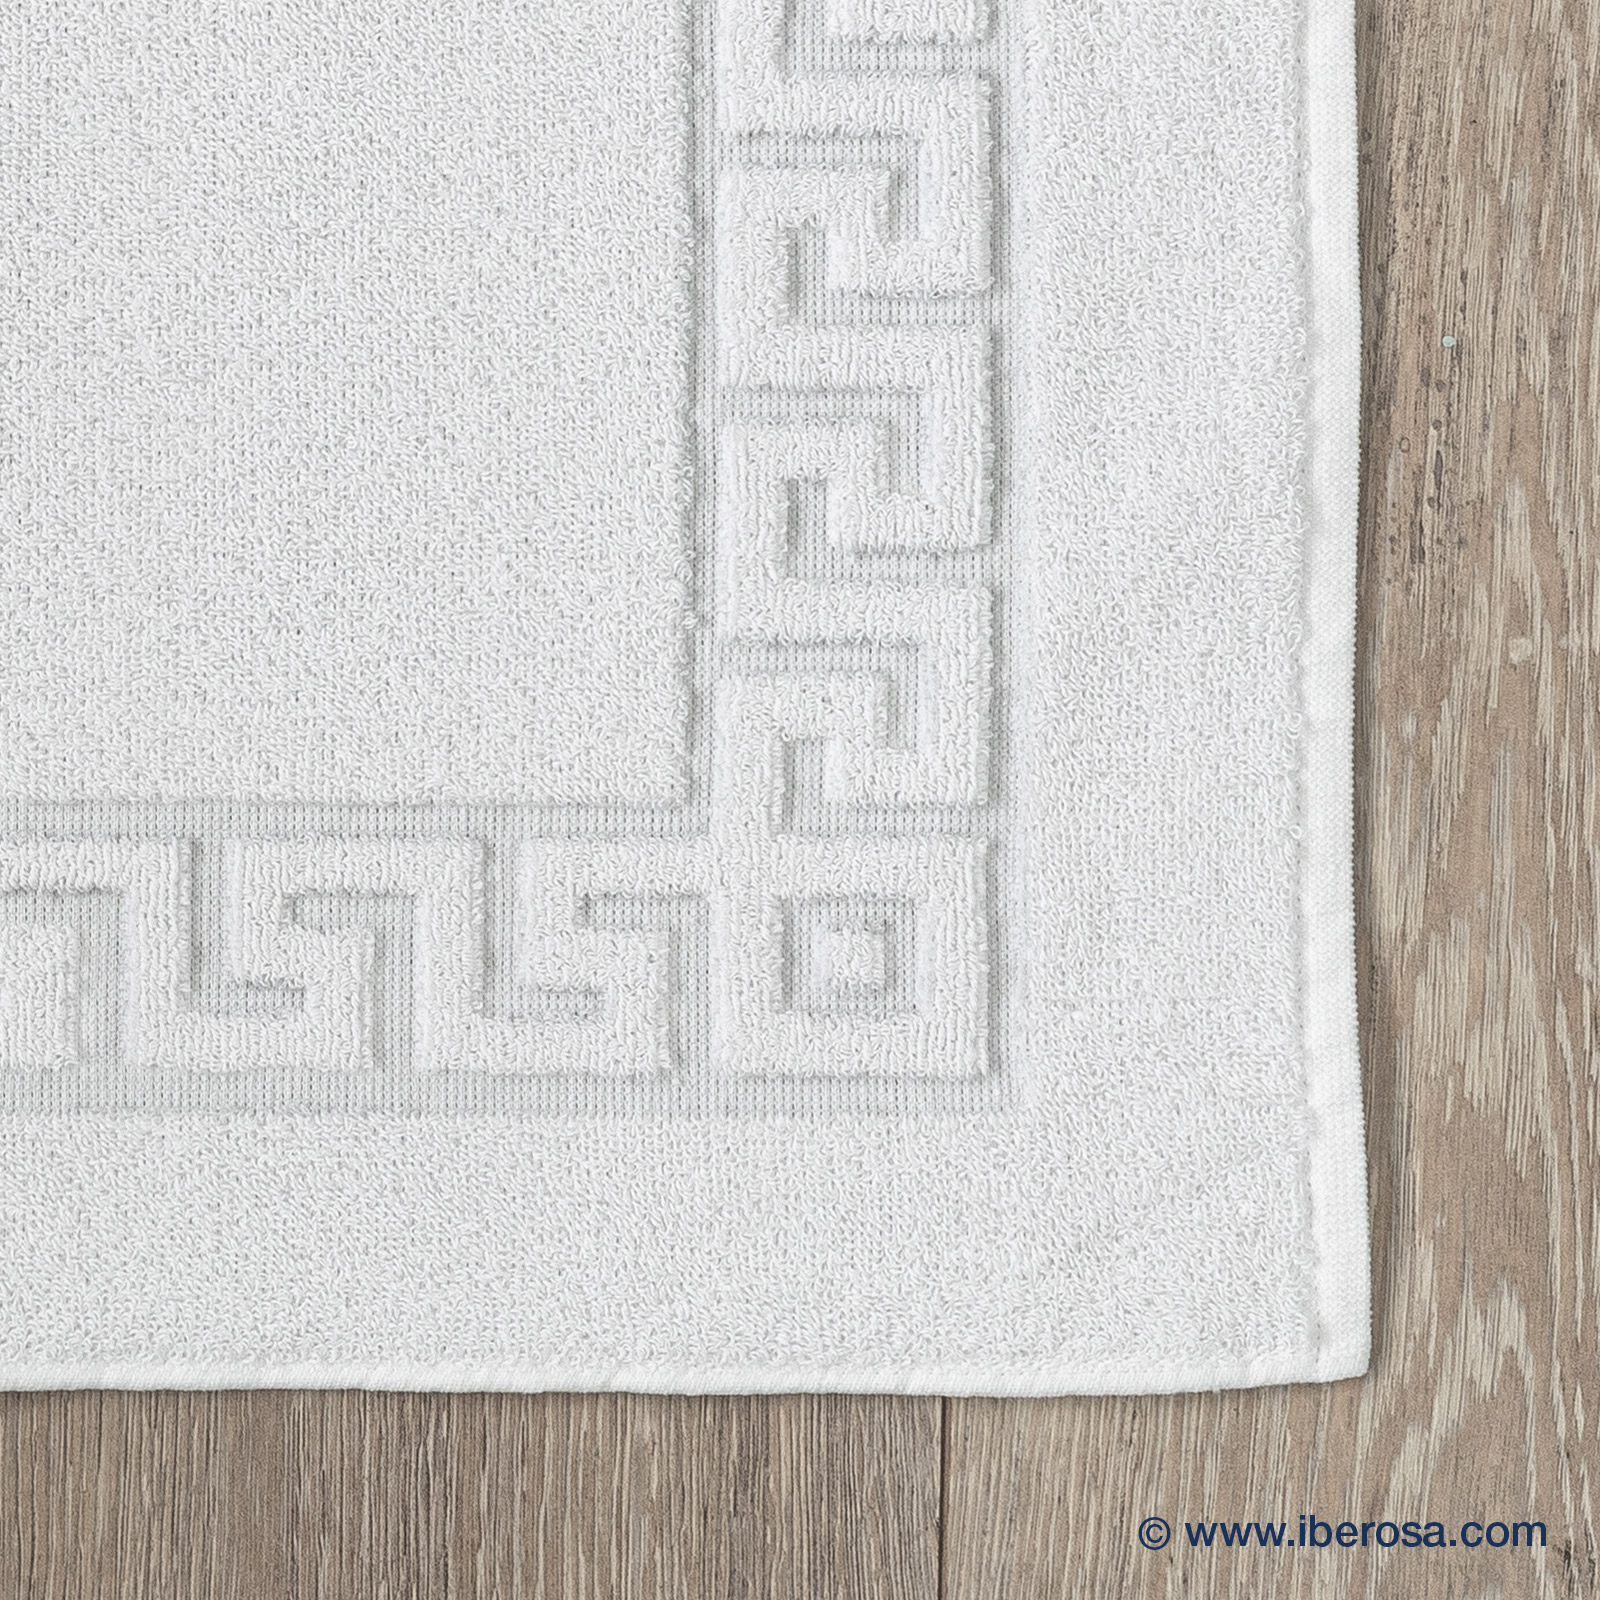 iberosa-textiles-rumbo-alfombra-bano-greca-02